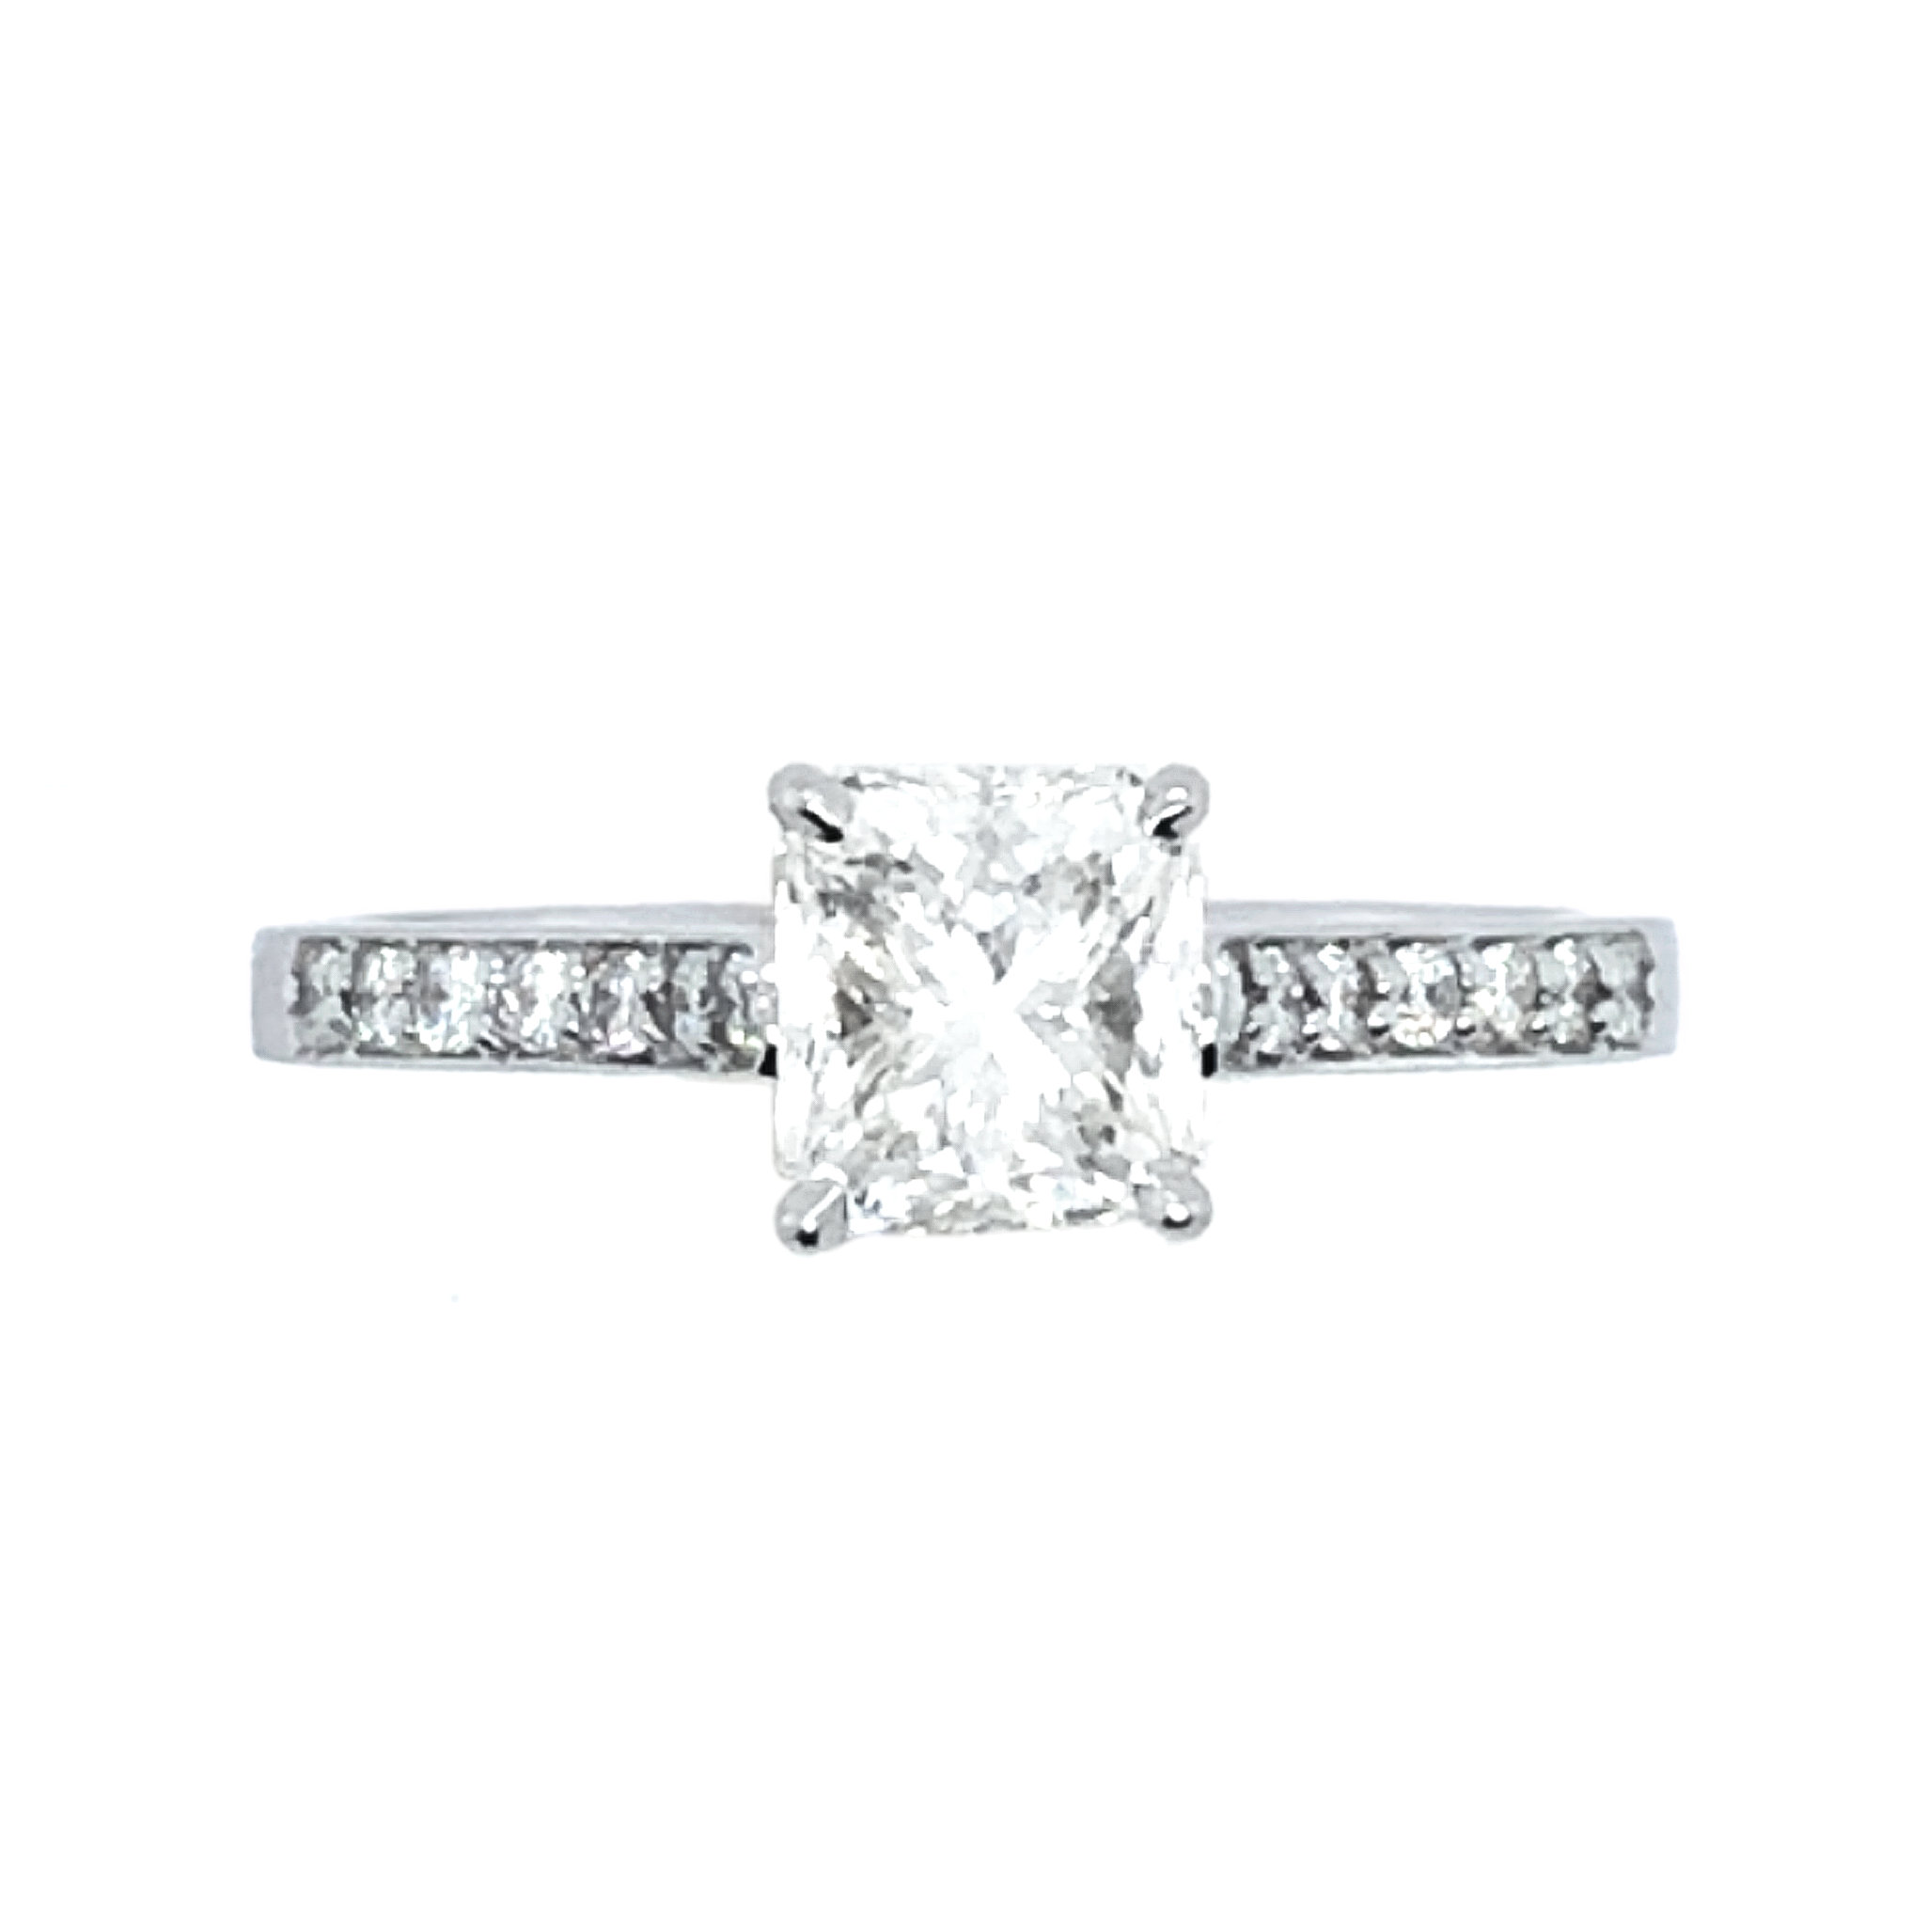 WHITE GOLD RADIANT CUT DIAMOND RING - Argo & Lehne Jewelers